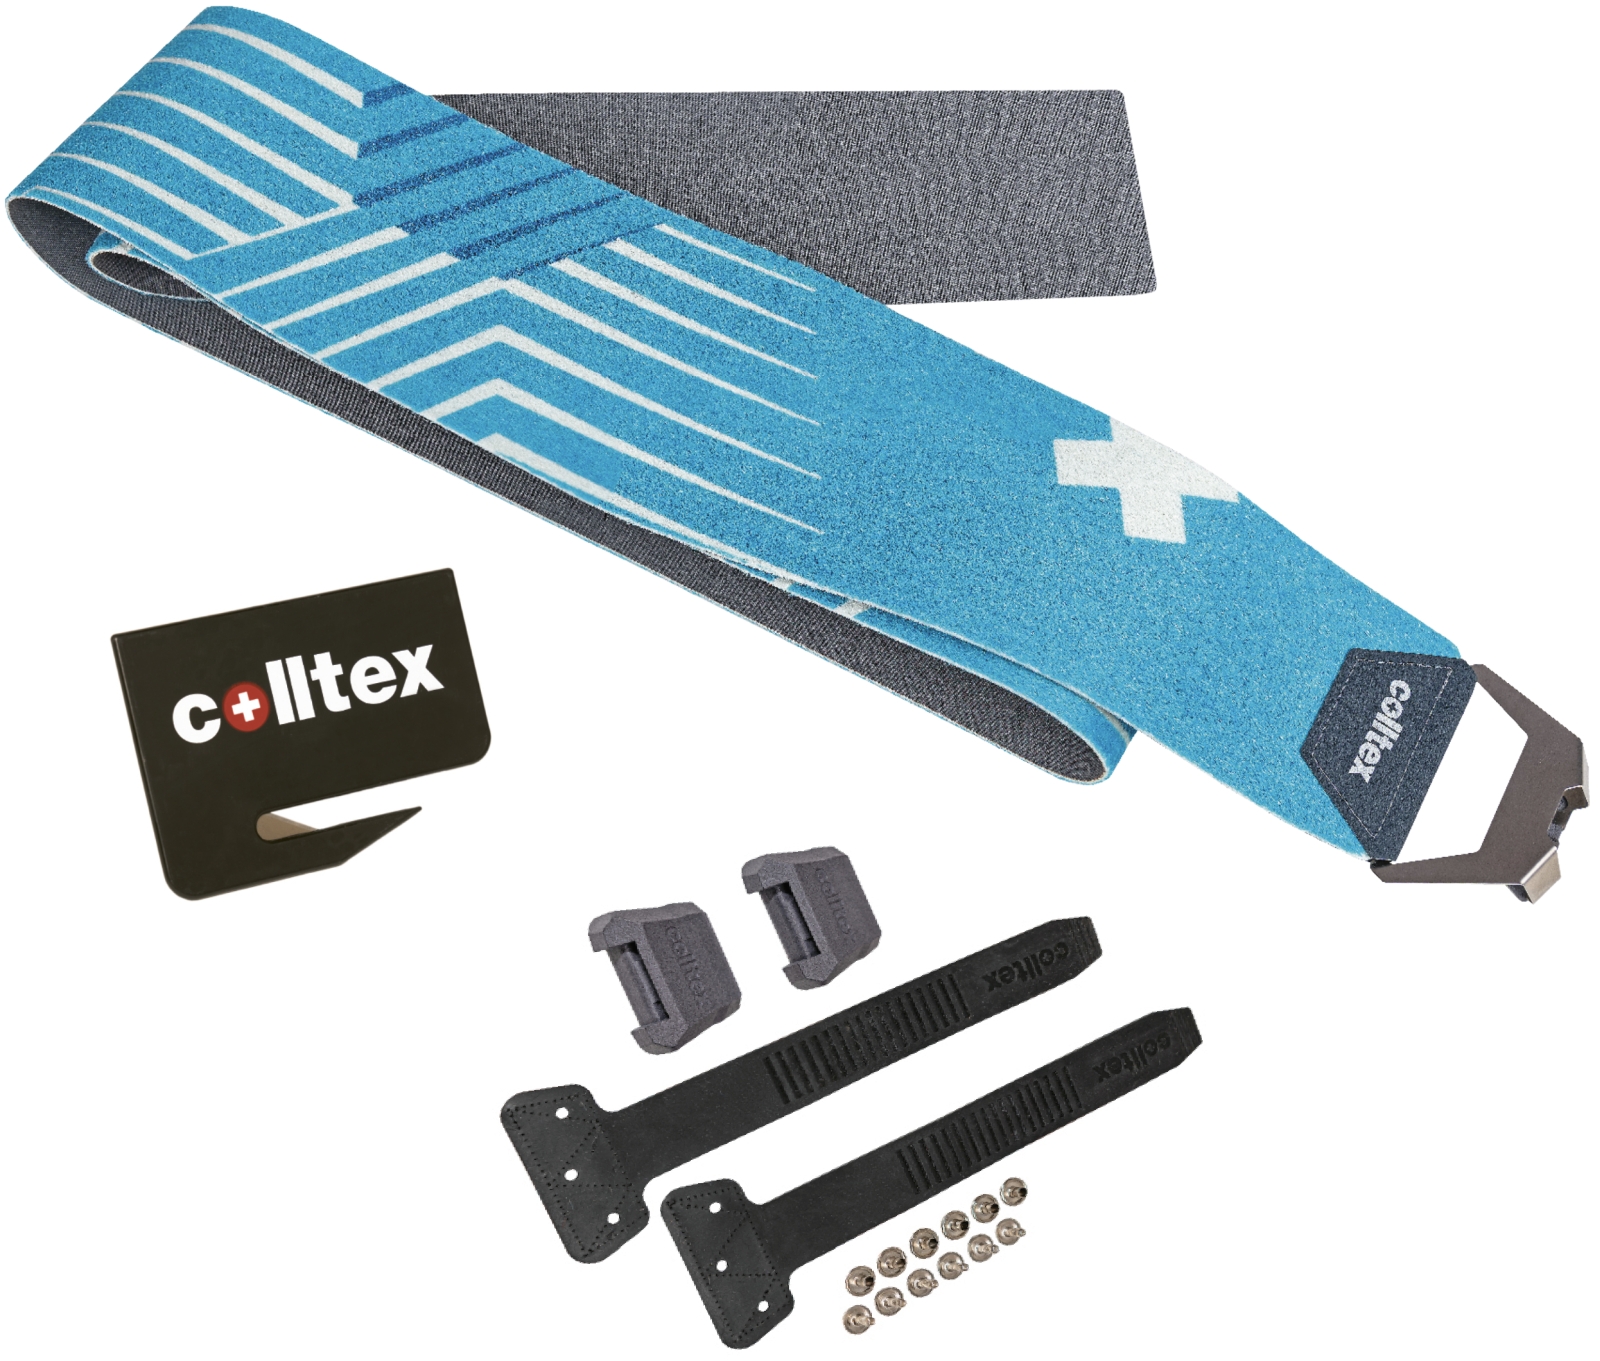 E-shop Colltex Tödi Crystal Allrounder Ski Skin 140mm 140mm